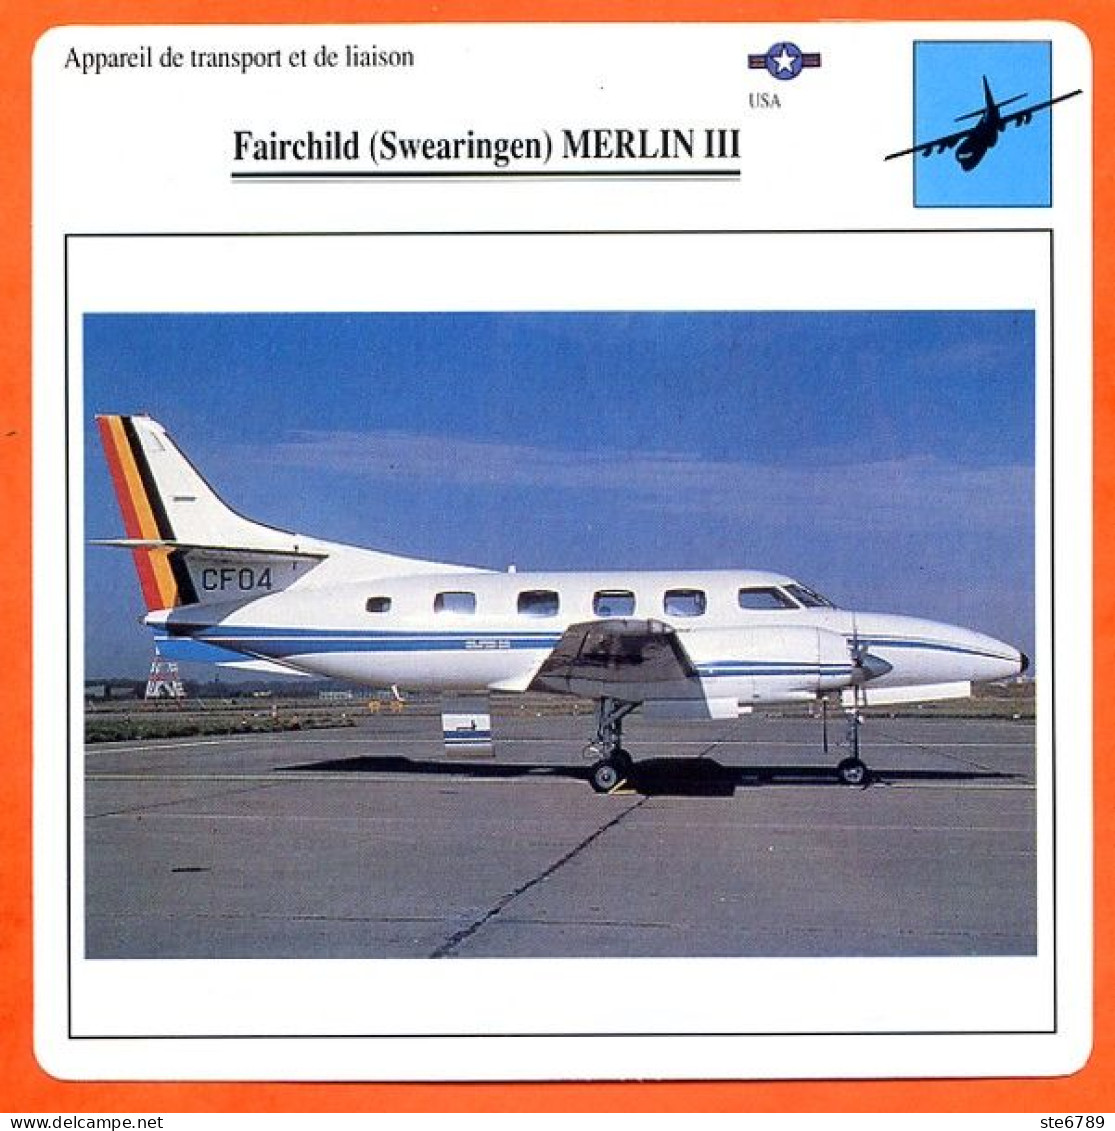 Fiche Aviation Fairchild Swearingen MERLIN III / Avion Transport Et Liaison USA Avions - Airplanes